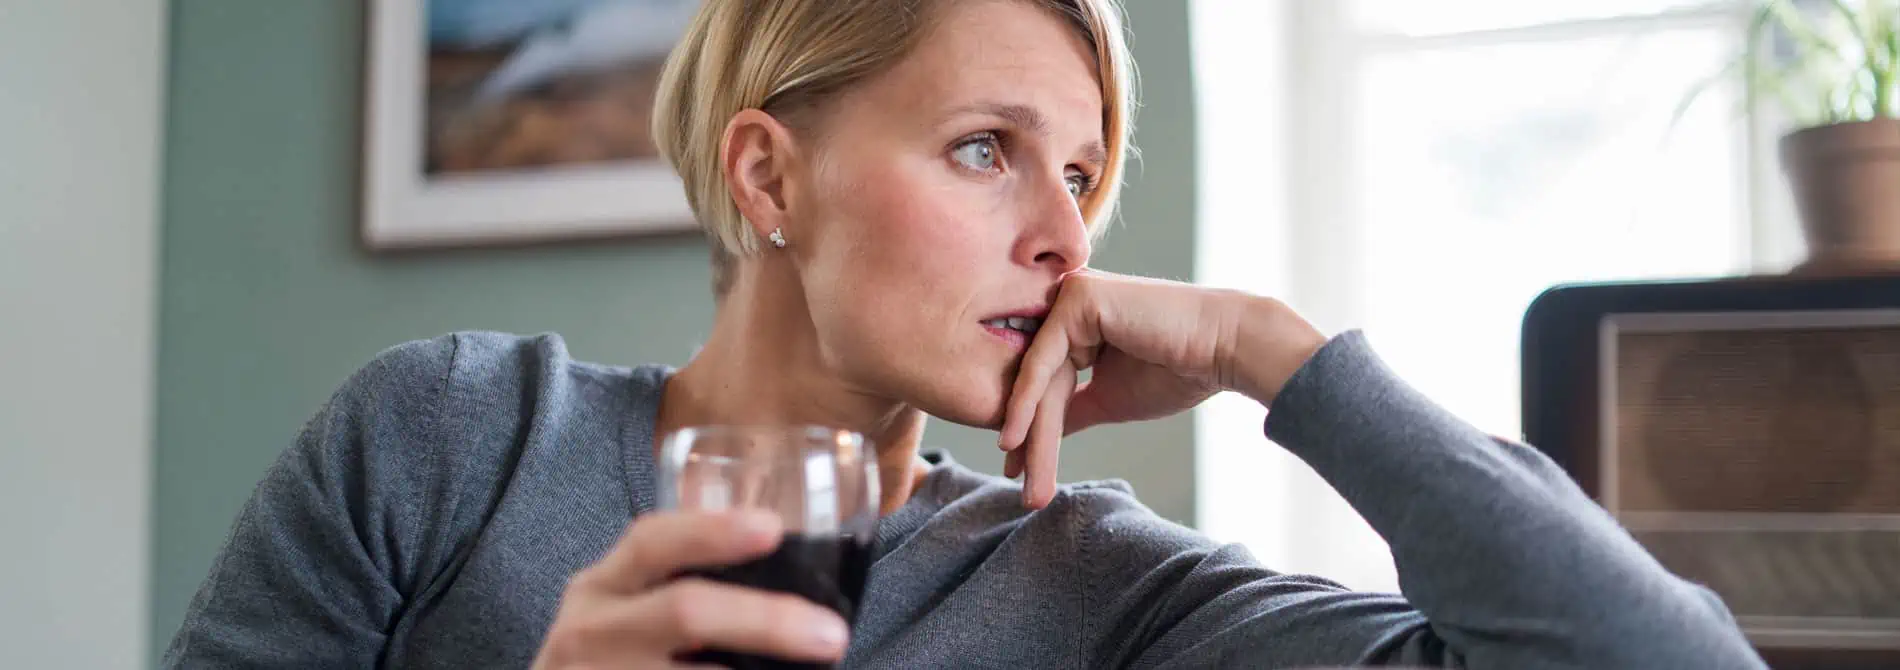 Anxious woman drinking wine